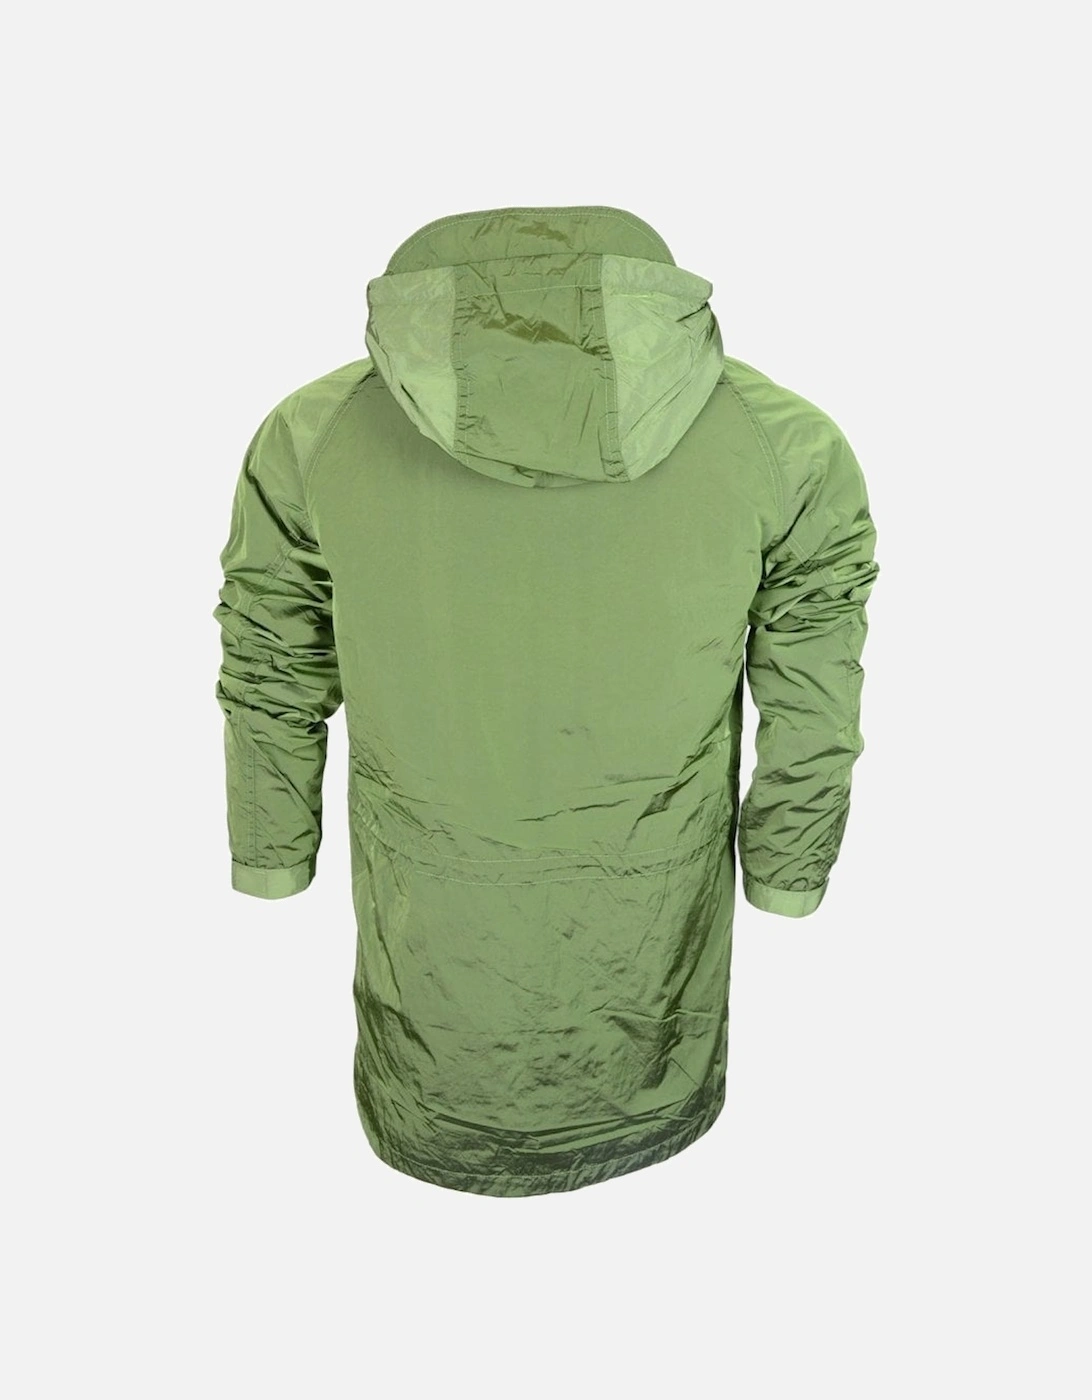 Duran Nylon Zip Up Hooded Green Jacket